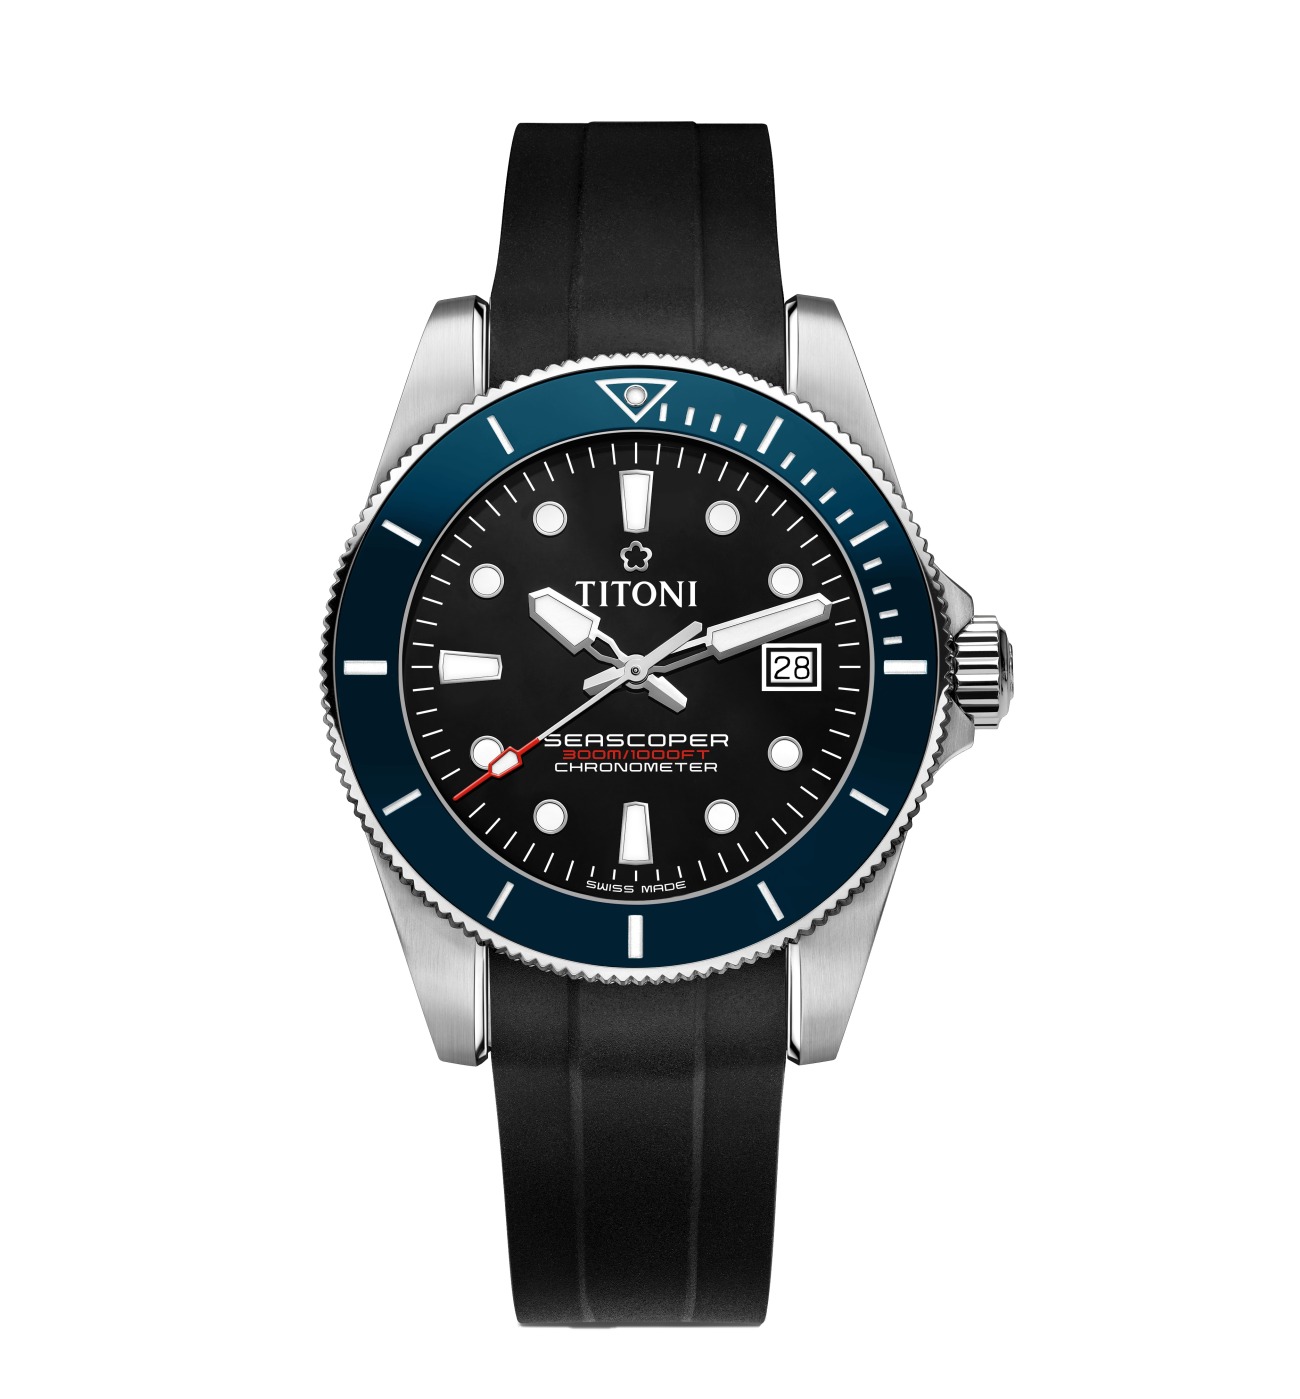 Titoni Seascoper 300米潛水錶不鏽鋼錶殼，錶徑42毫米，高質感陶瓷錶圈，時、分、秒、日期，SW 200-1自動上鍊機芯，動力儲存40小時，C.O.S.C.認證，藍寶石水晶玻璃鏡面，防水300米，不鏽鋼鍊帶，錶帶快調延伸裝置，建議售價NTD 54,000(橡膠錶帶)/56,000(鍊帶)。